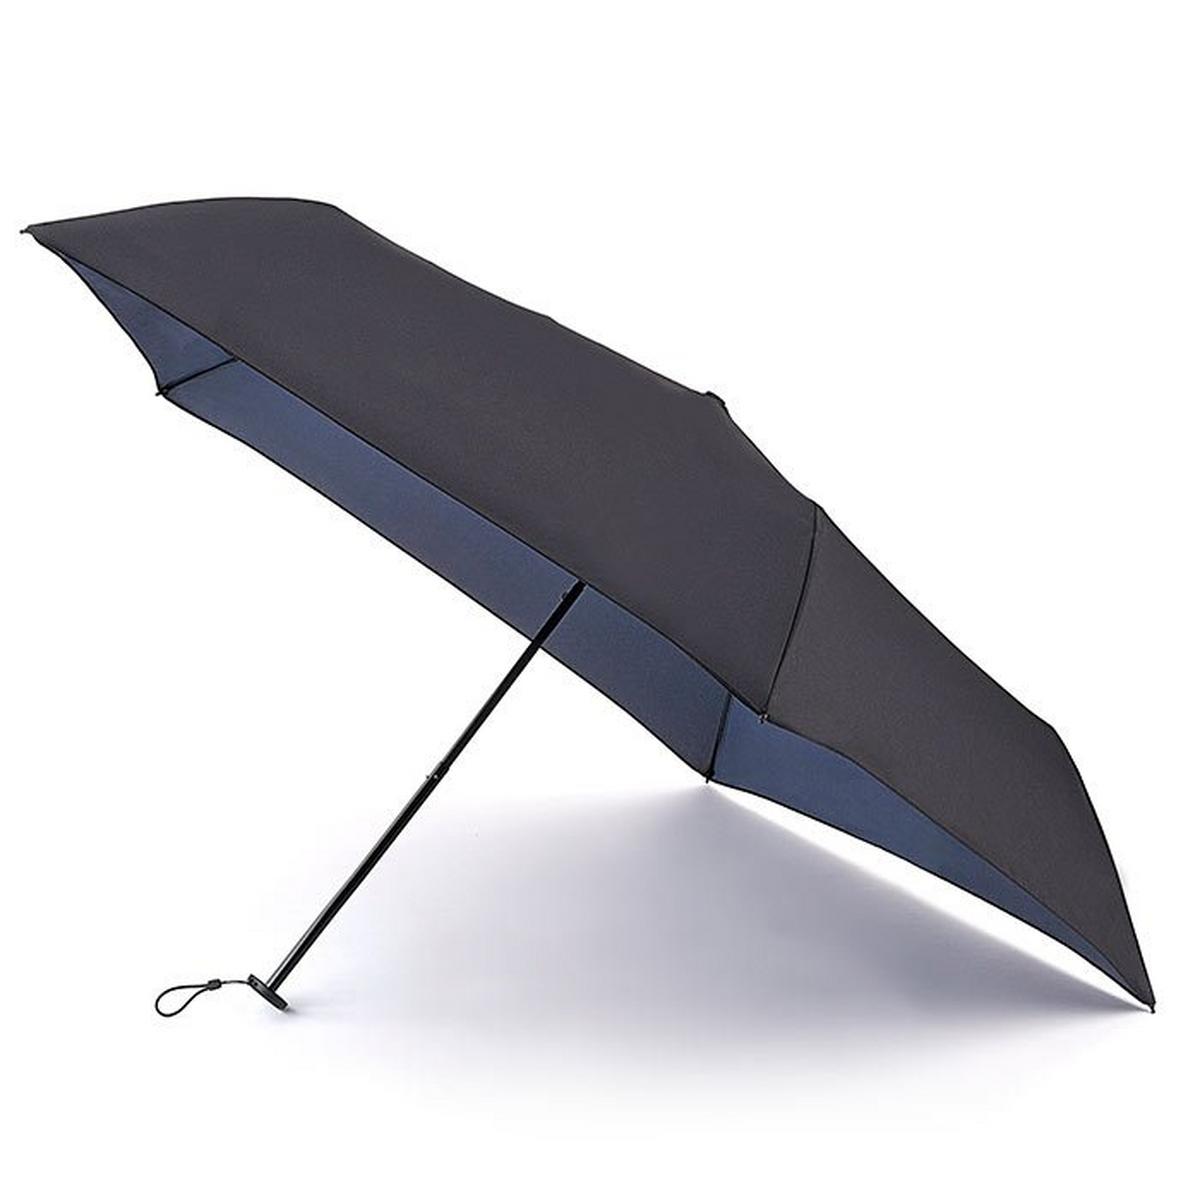 Aerolite 1 Umbrella